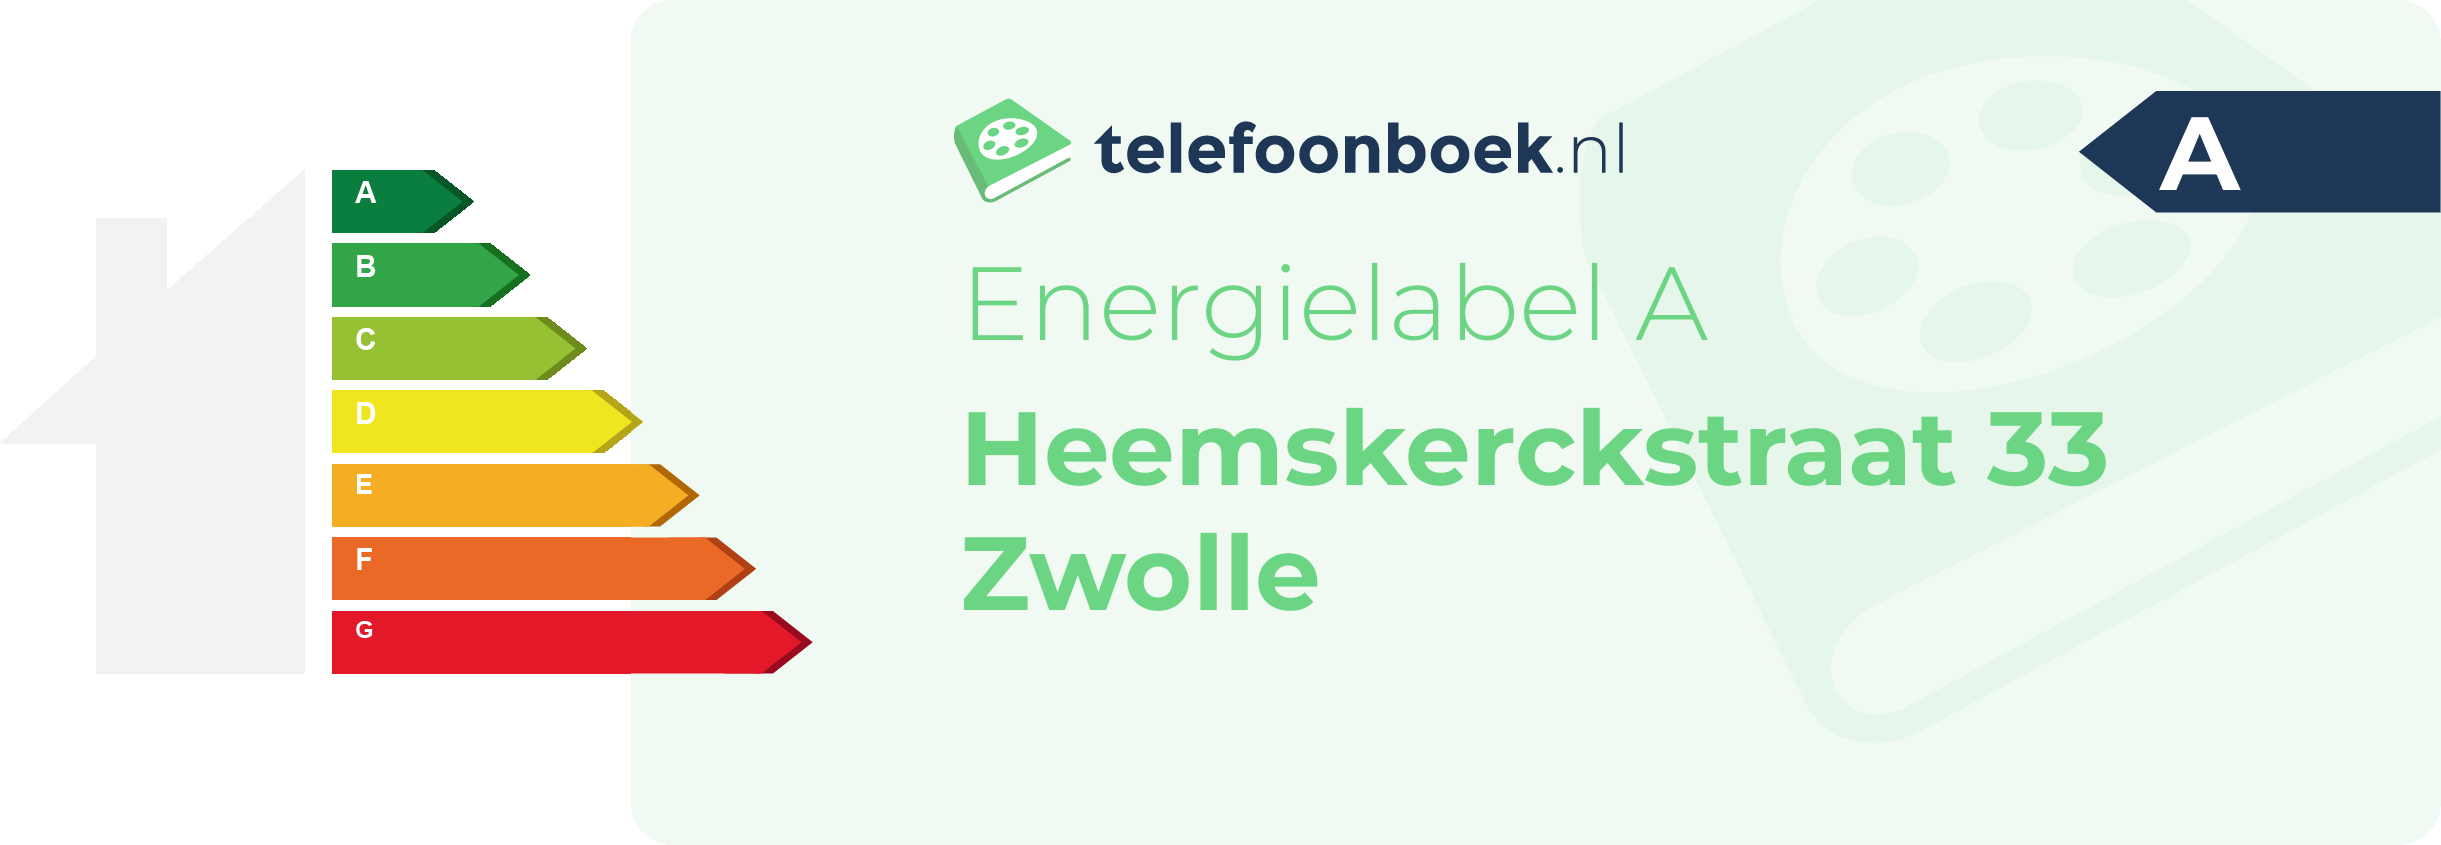 Energielabel Heemskerckstraat 33 Zwolle